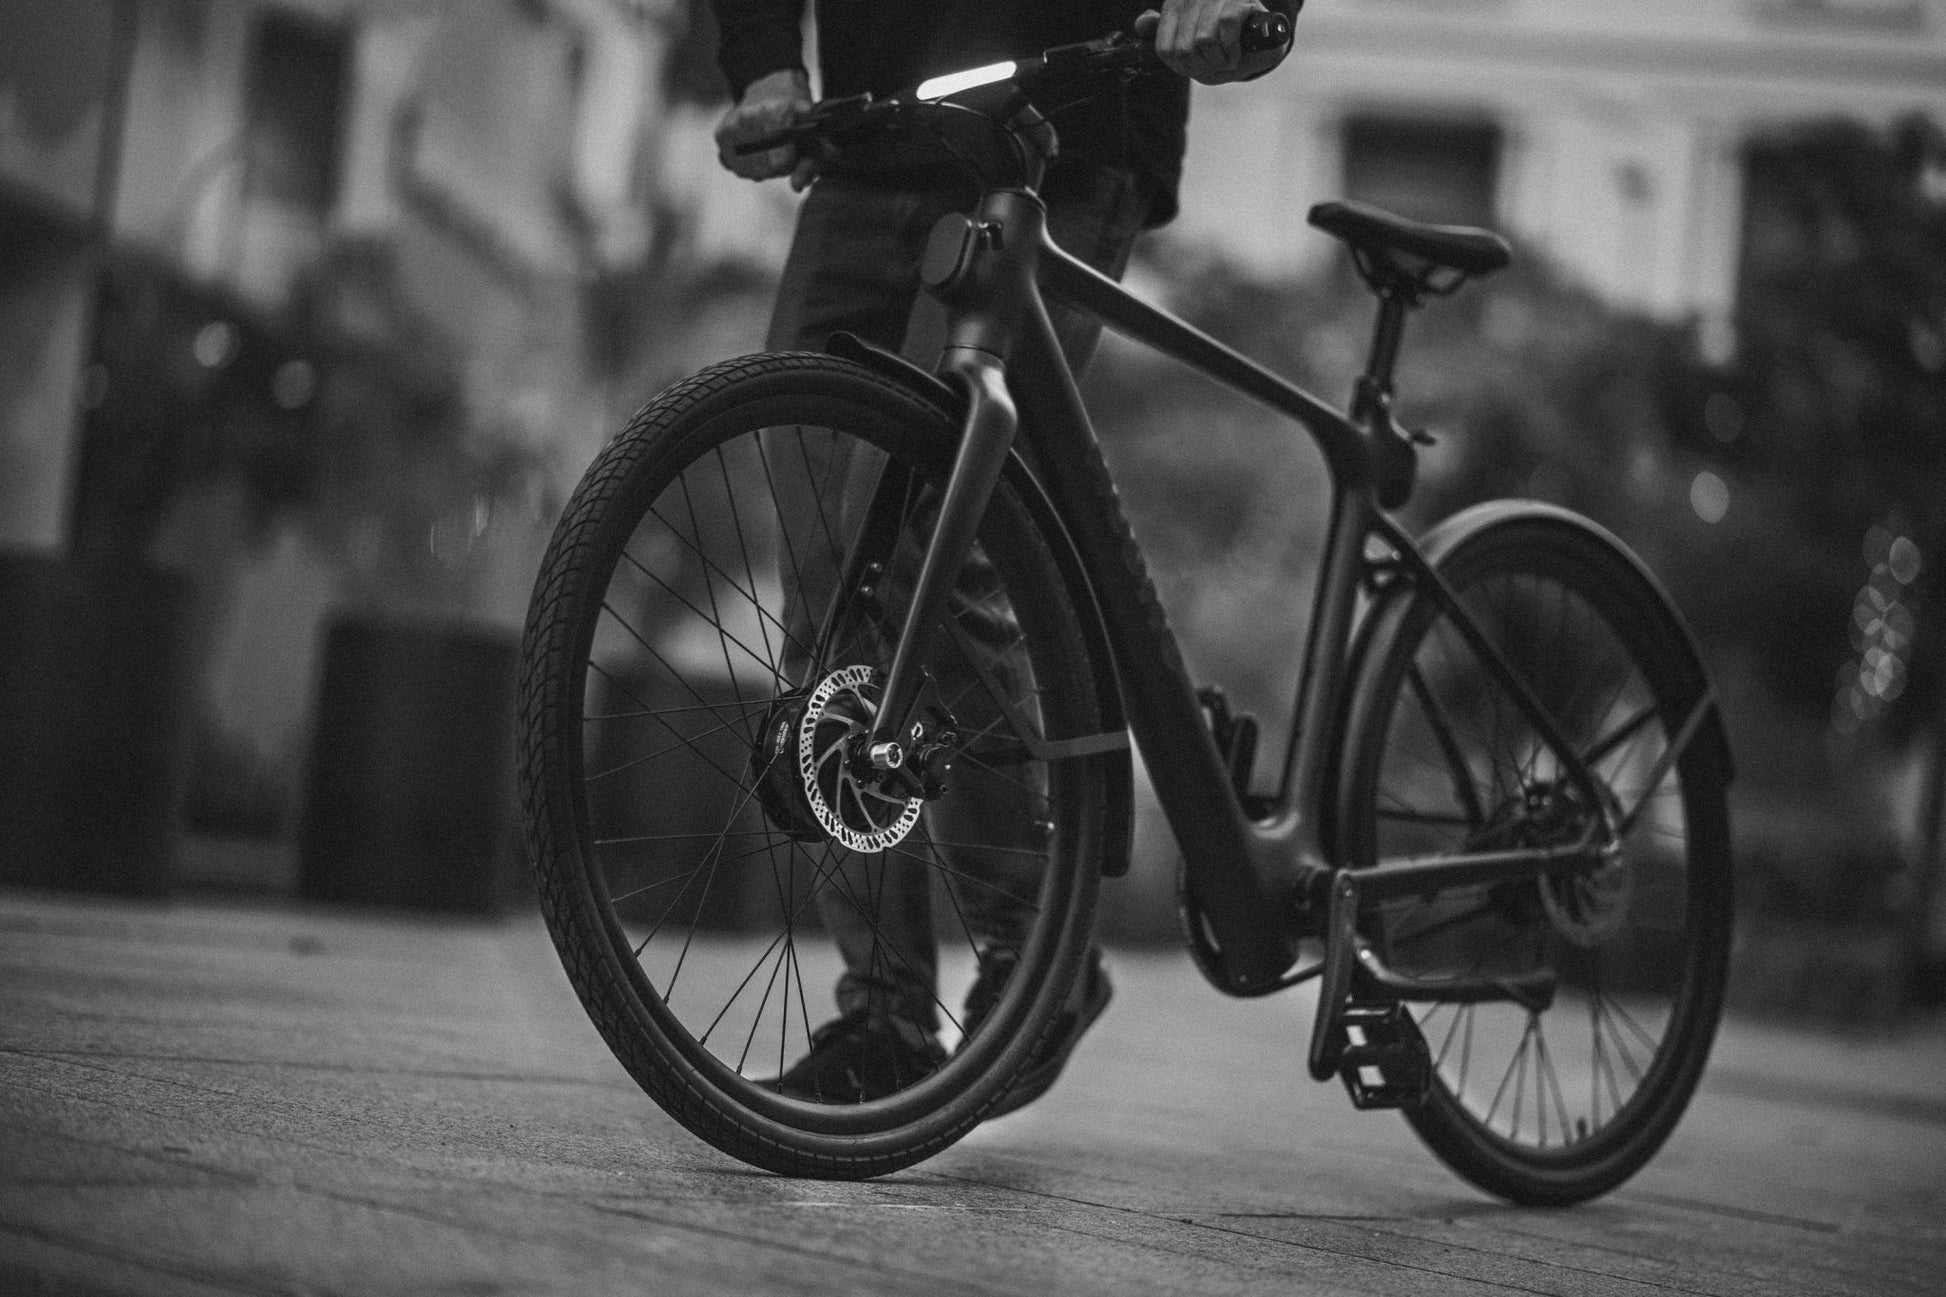 Modmo Saigon+ Electric Bicycle - RRP £2800 - Size L (Rider 175-190cm) - William George